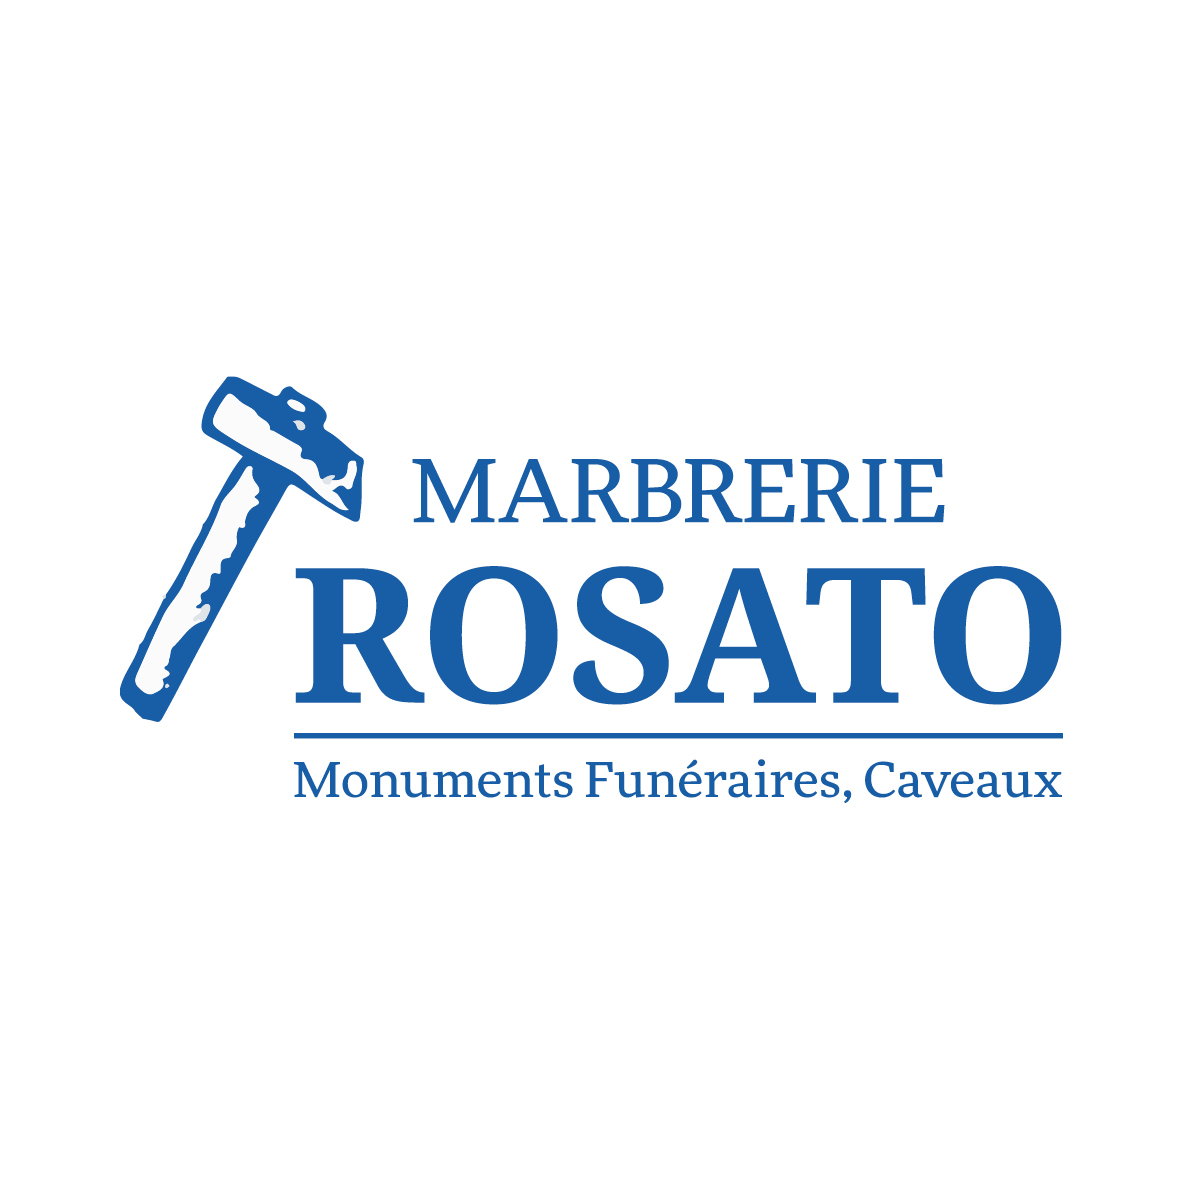 Marbrerie Rosato